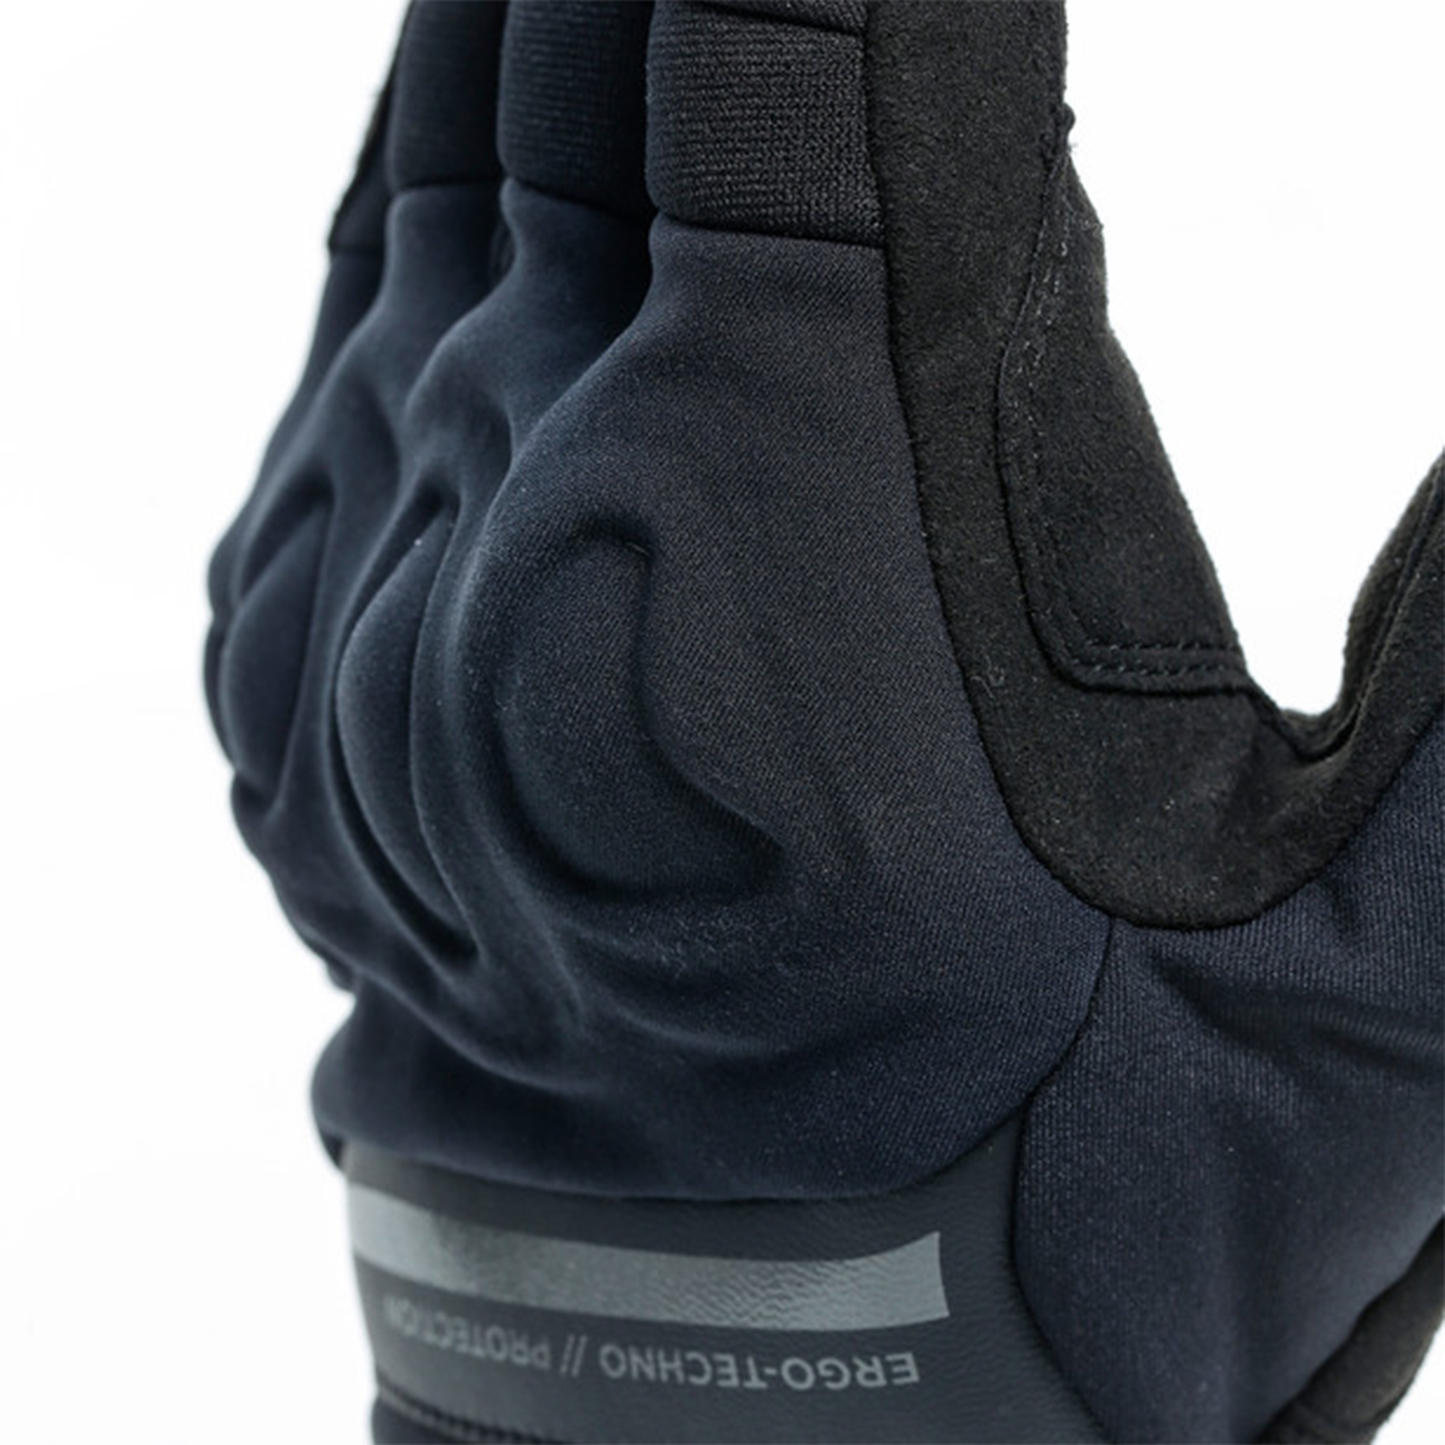 Dainese Nembo Goretex Gloves with Goregrip (631)